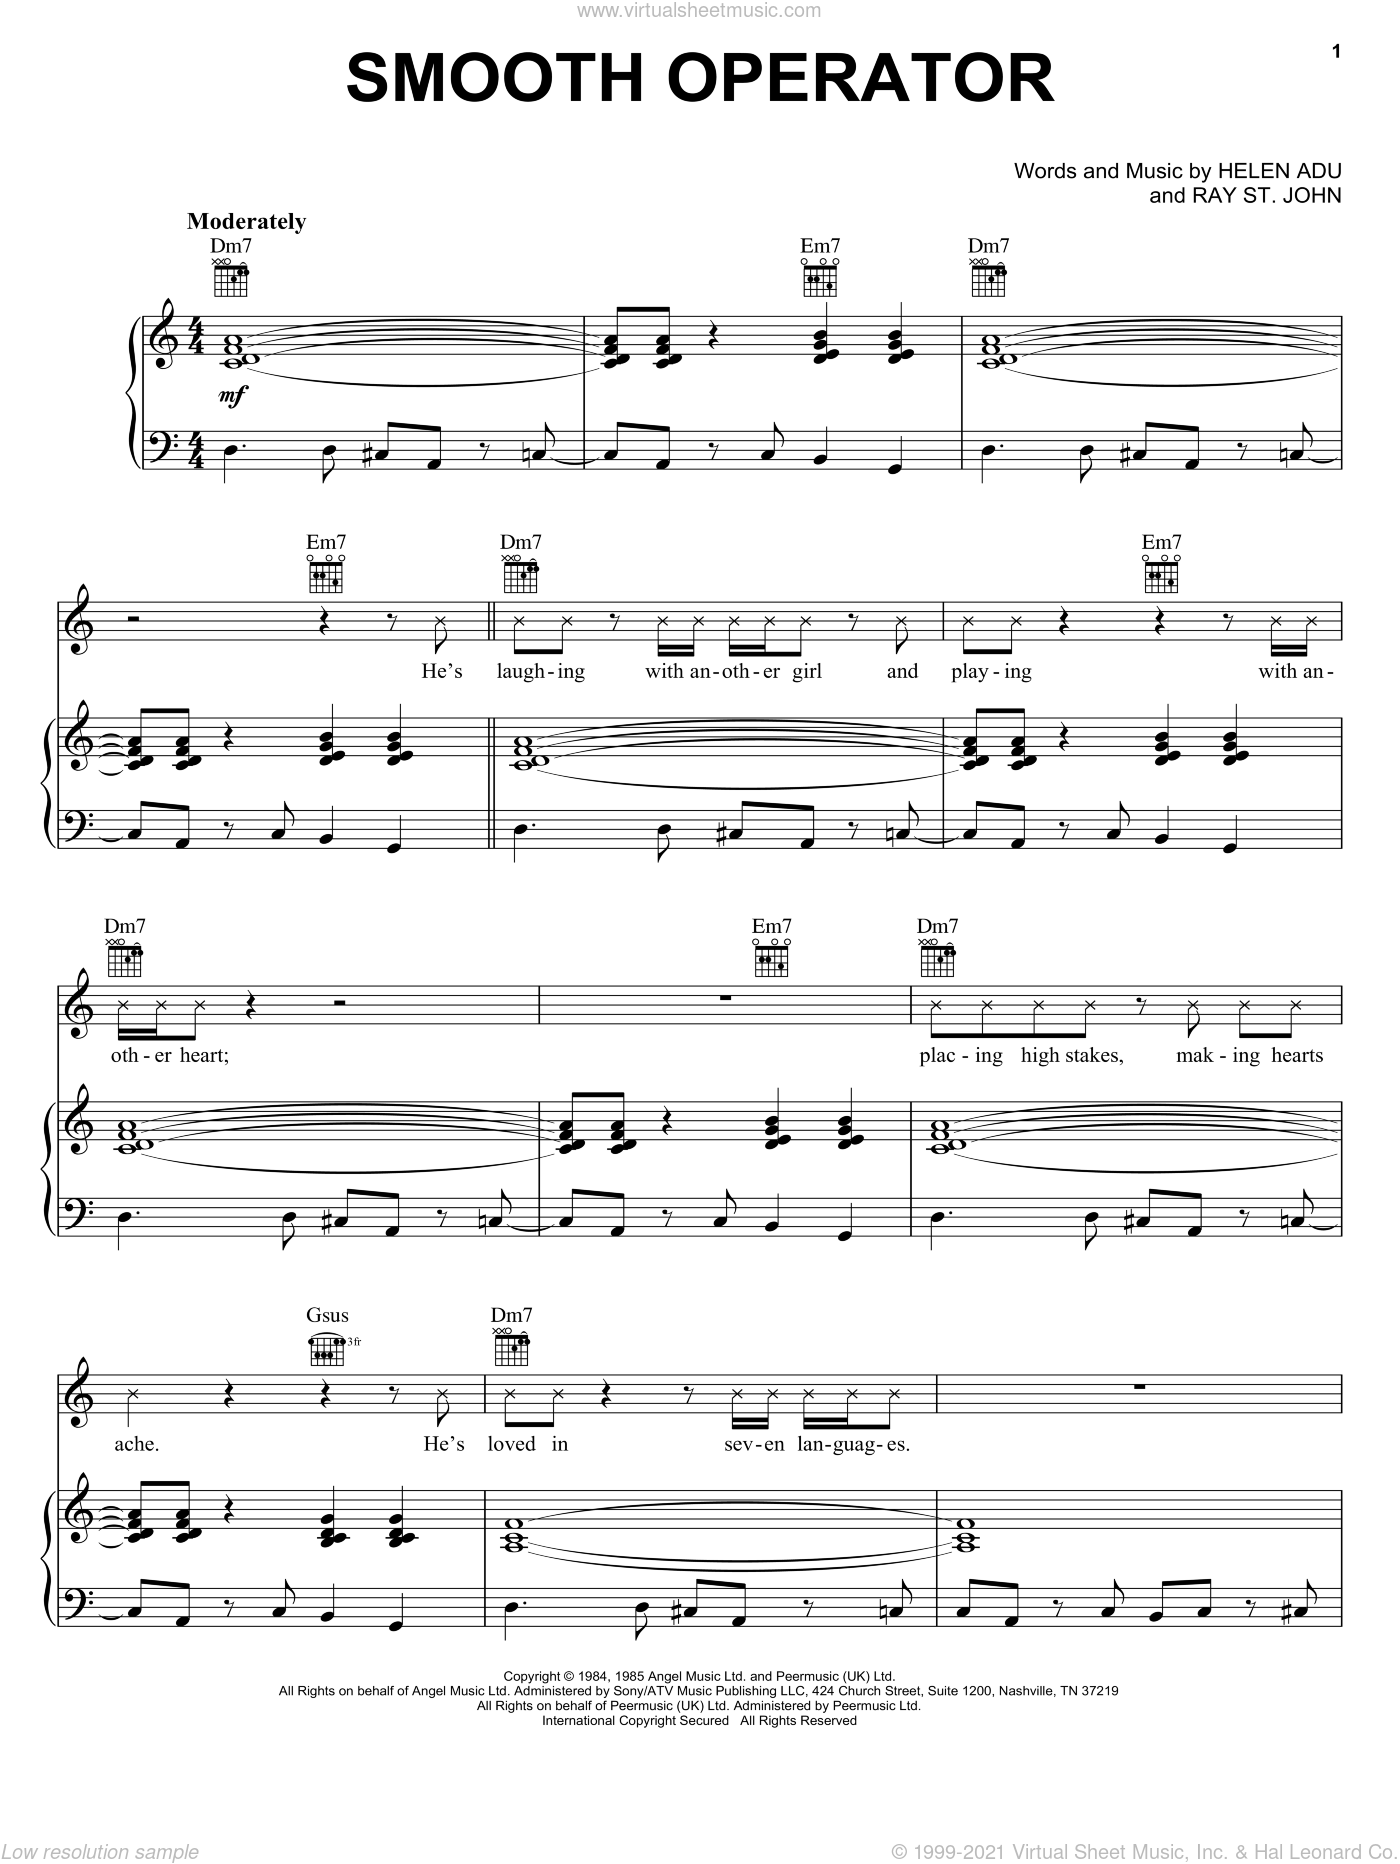 Sade - Smooth Operator Sheet Music For Voice, Piano Or Guitar